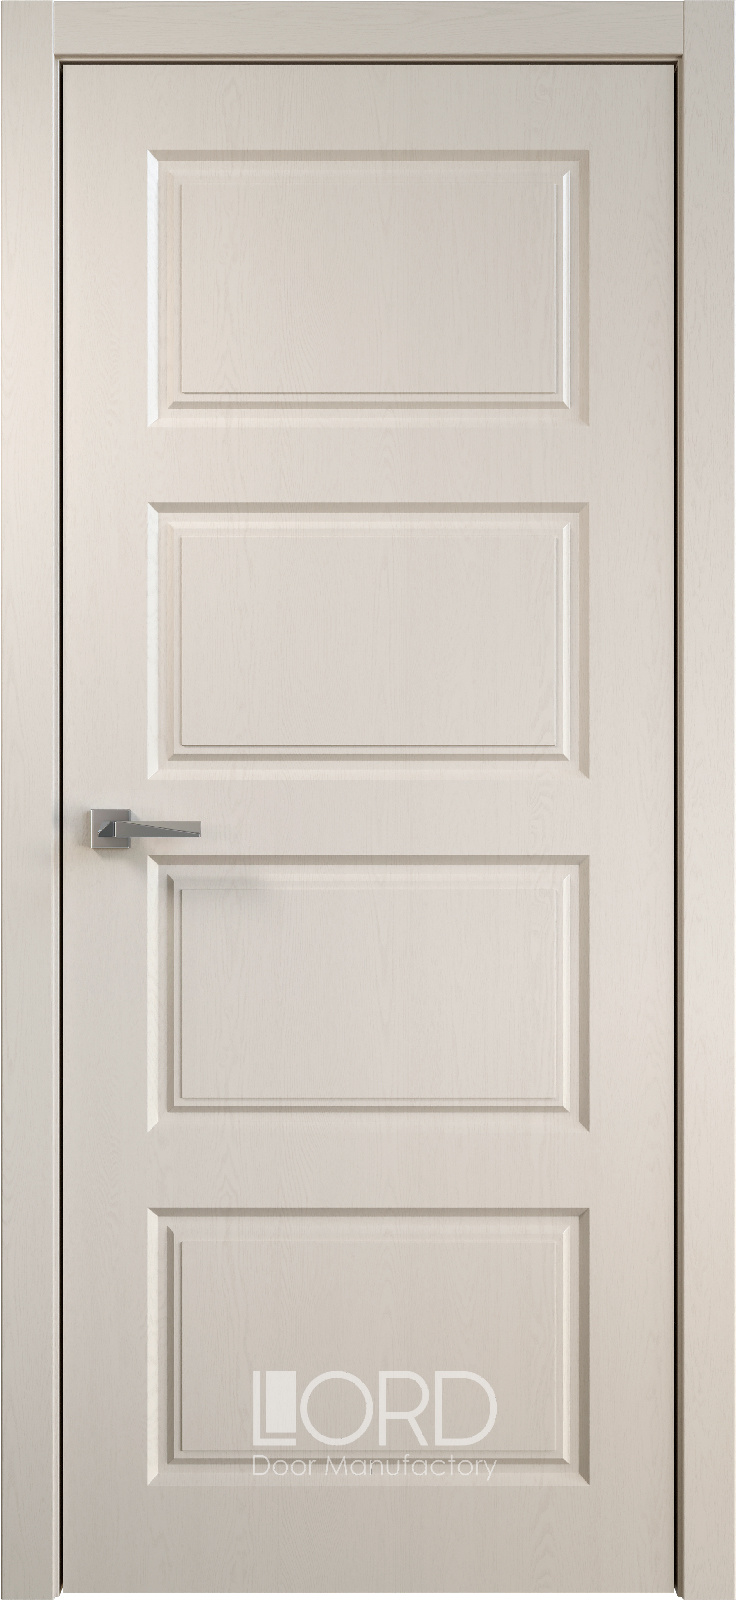 Лорд Межкомнатная дверь K 3 ДГ, арт. 22817 - фото №1